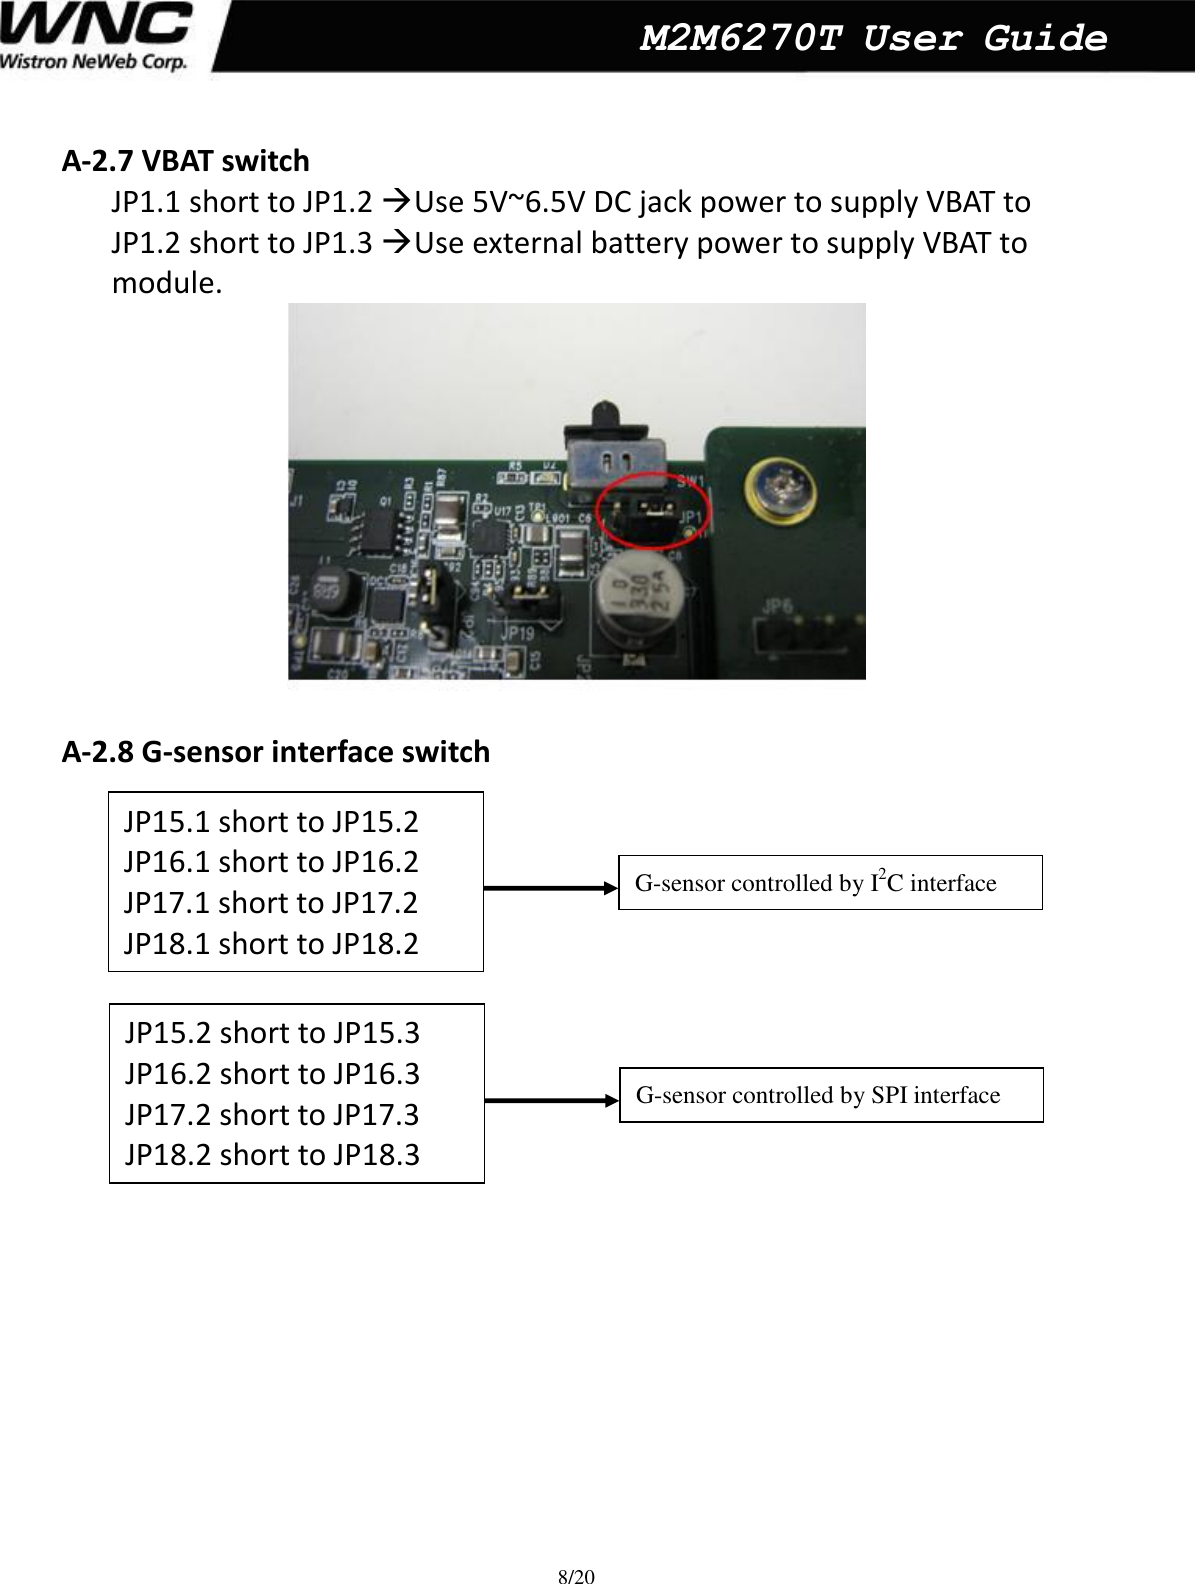  8/20  M2M6270T User Guide A-2.7 VBAT switch JP1.1 short to JP1.2 Use 5V~6.5V DC jack power to supply VBAT to     JP1.2 short to JP1.3 Use external battery power to supply VBAT to   module.     A-2.8 G-sensor interface switch                         JP15.1 short to JP15.2 JP16.1 short to JP16.2 JP17.1 short to JP17.2 JP18.1 short to JP18.2 JP15.2 short to JP15.3 JP16.2 short to JP16.3 JP17.2 short to JP17.3 JP18.2 short to JP18.3 G-sensor controlled by I2C interface   G-sensor controlled by SPI interface 